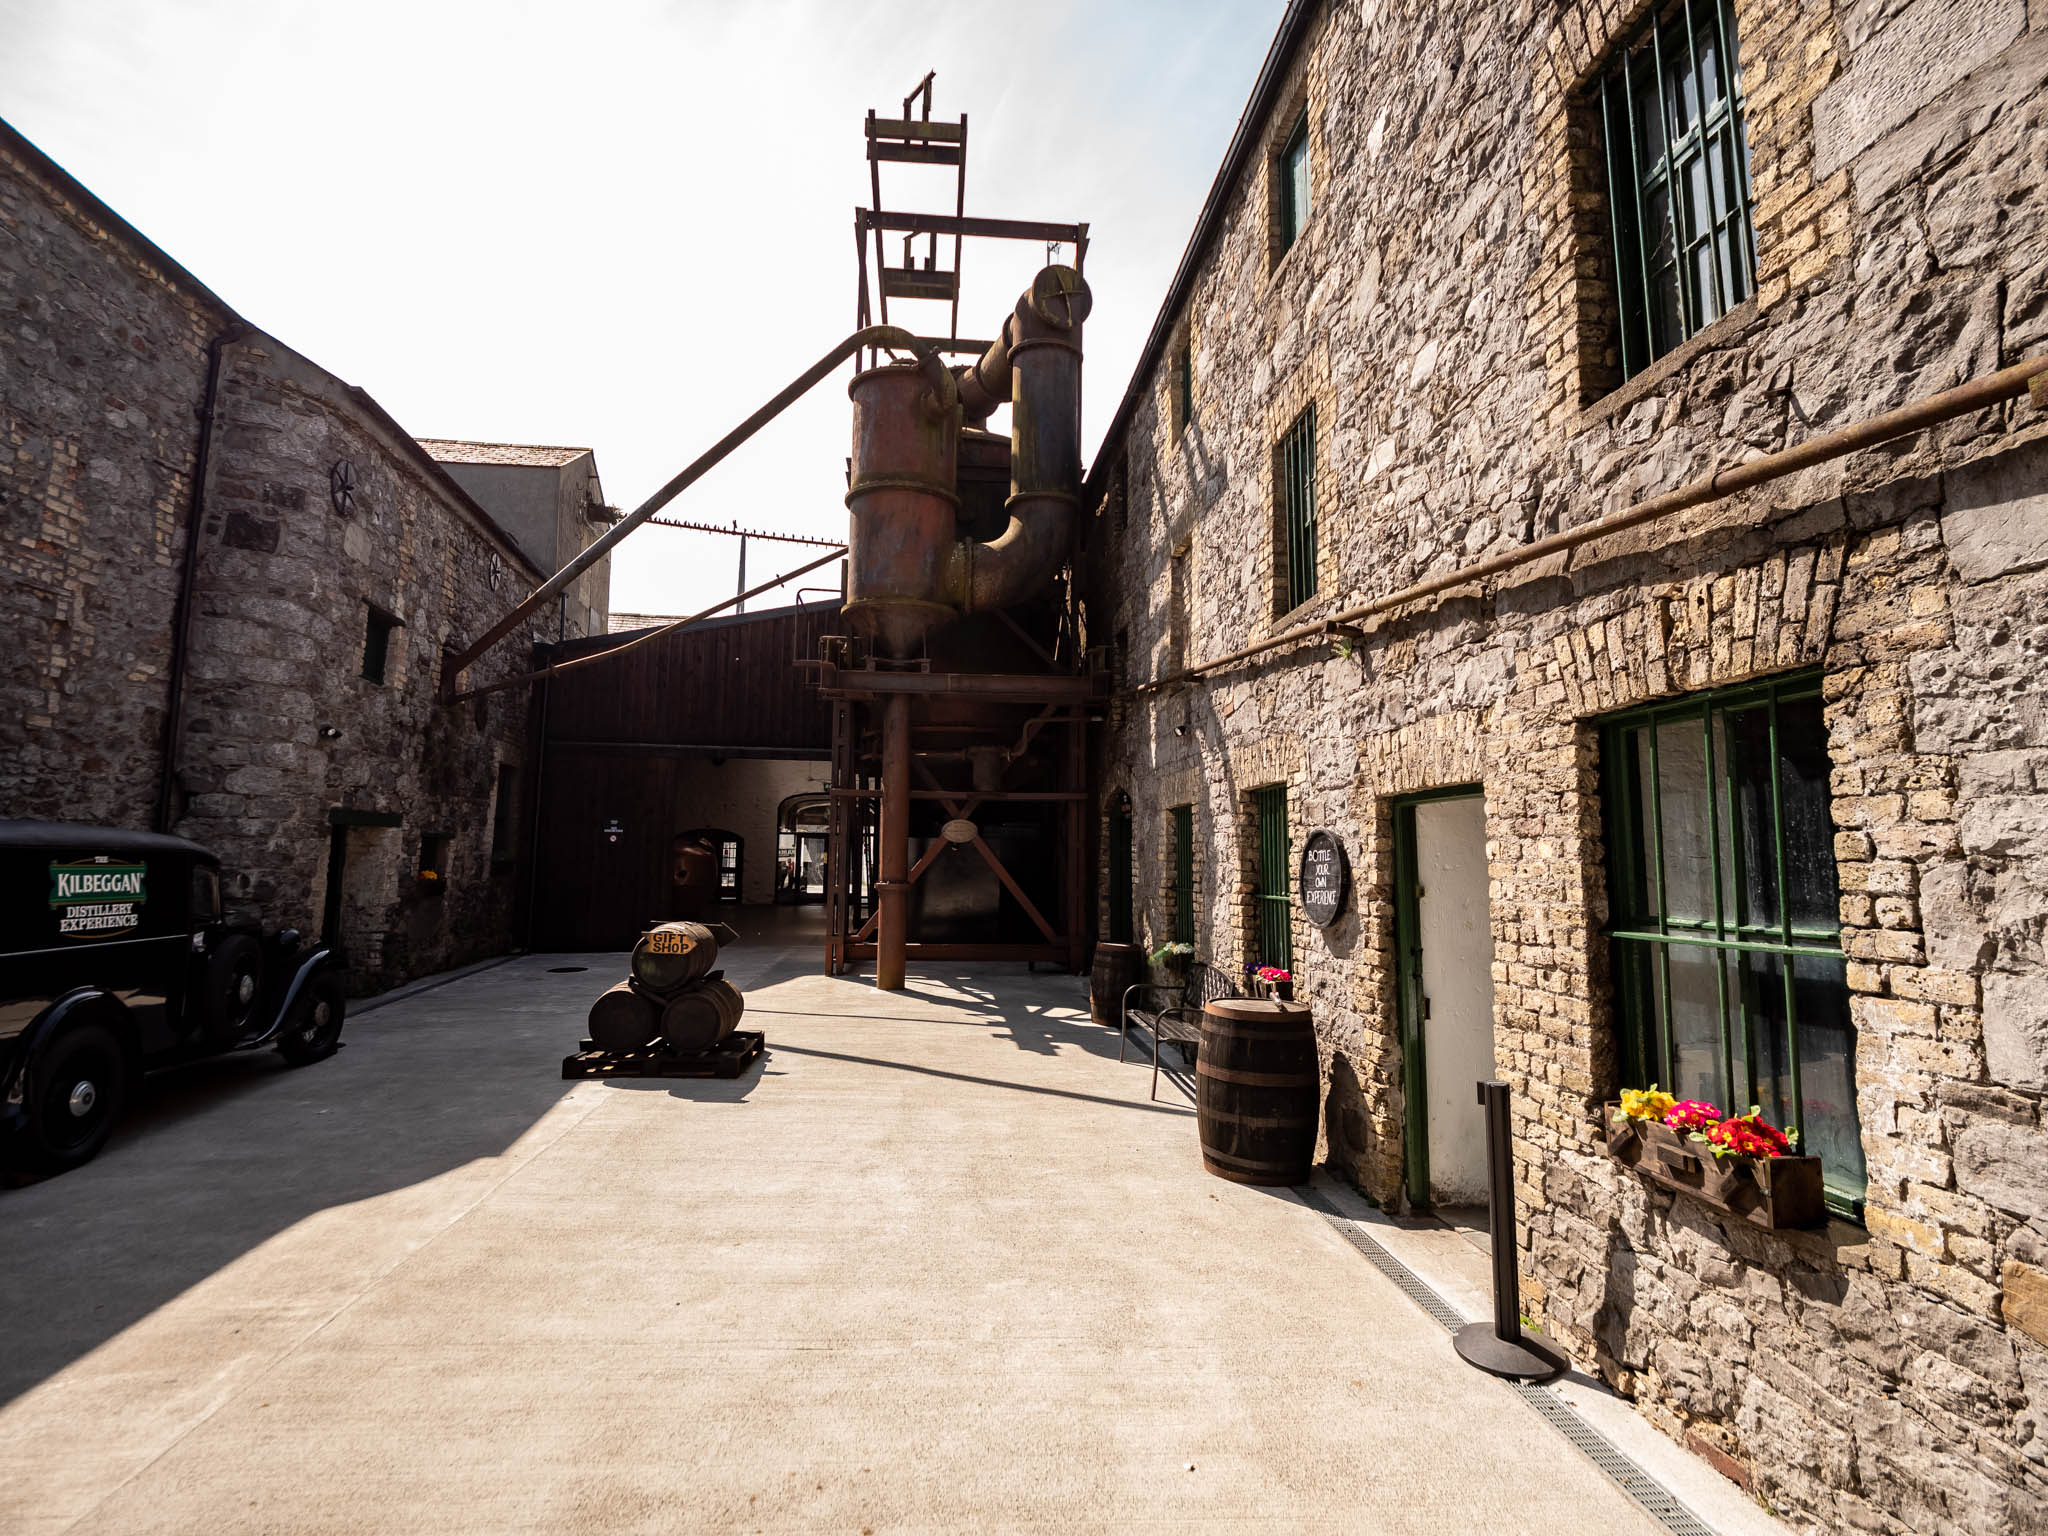 kilbeggan whiskey distillery tour